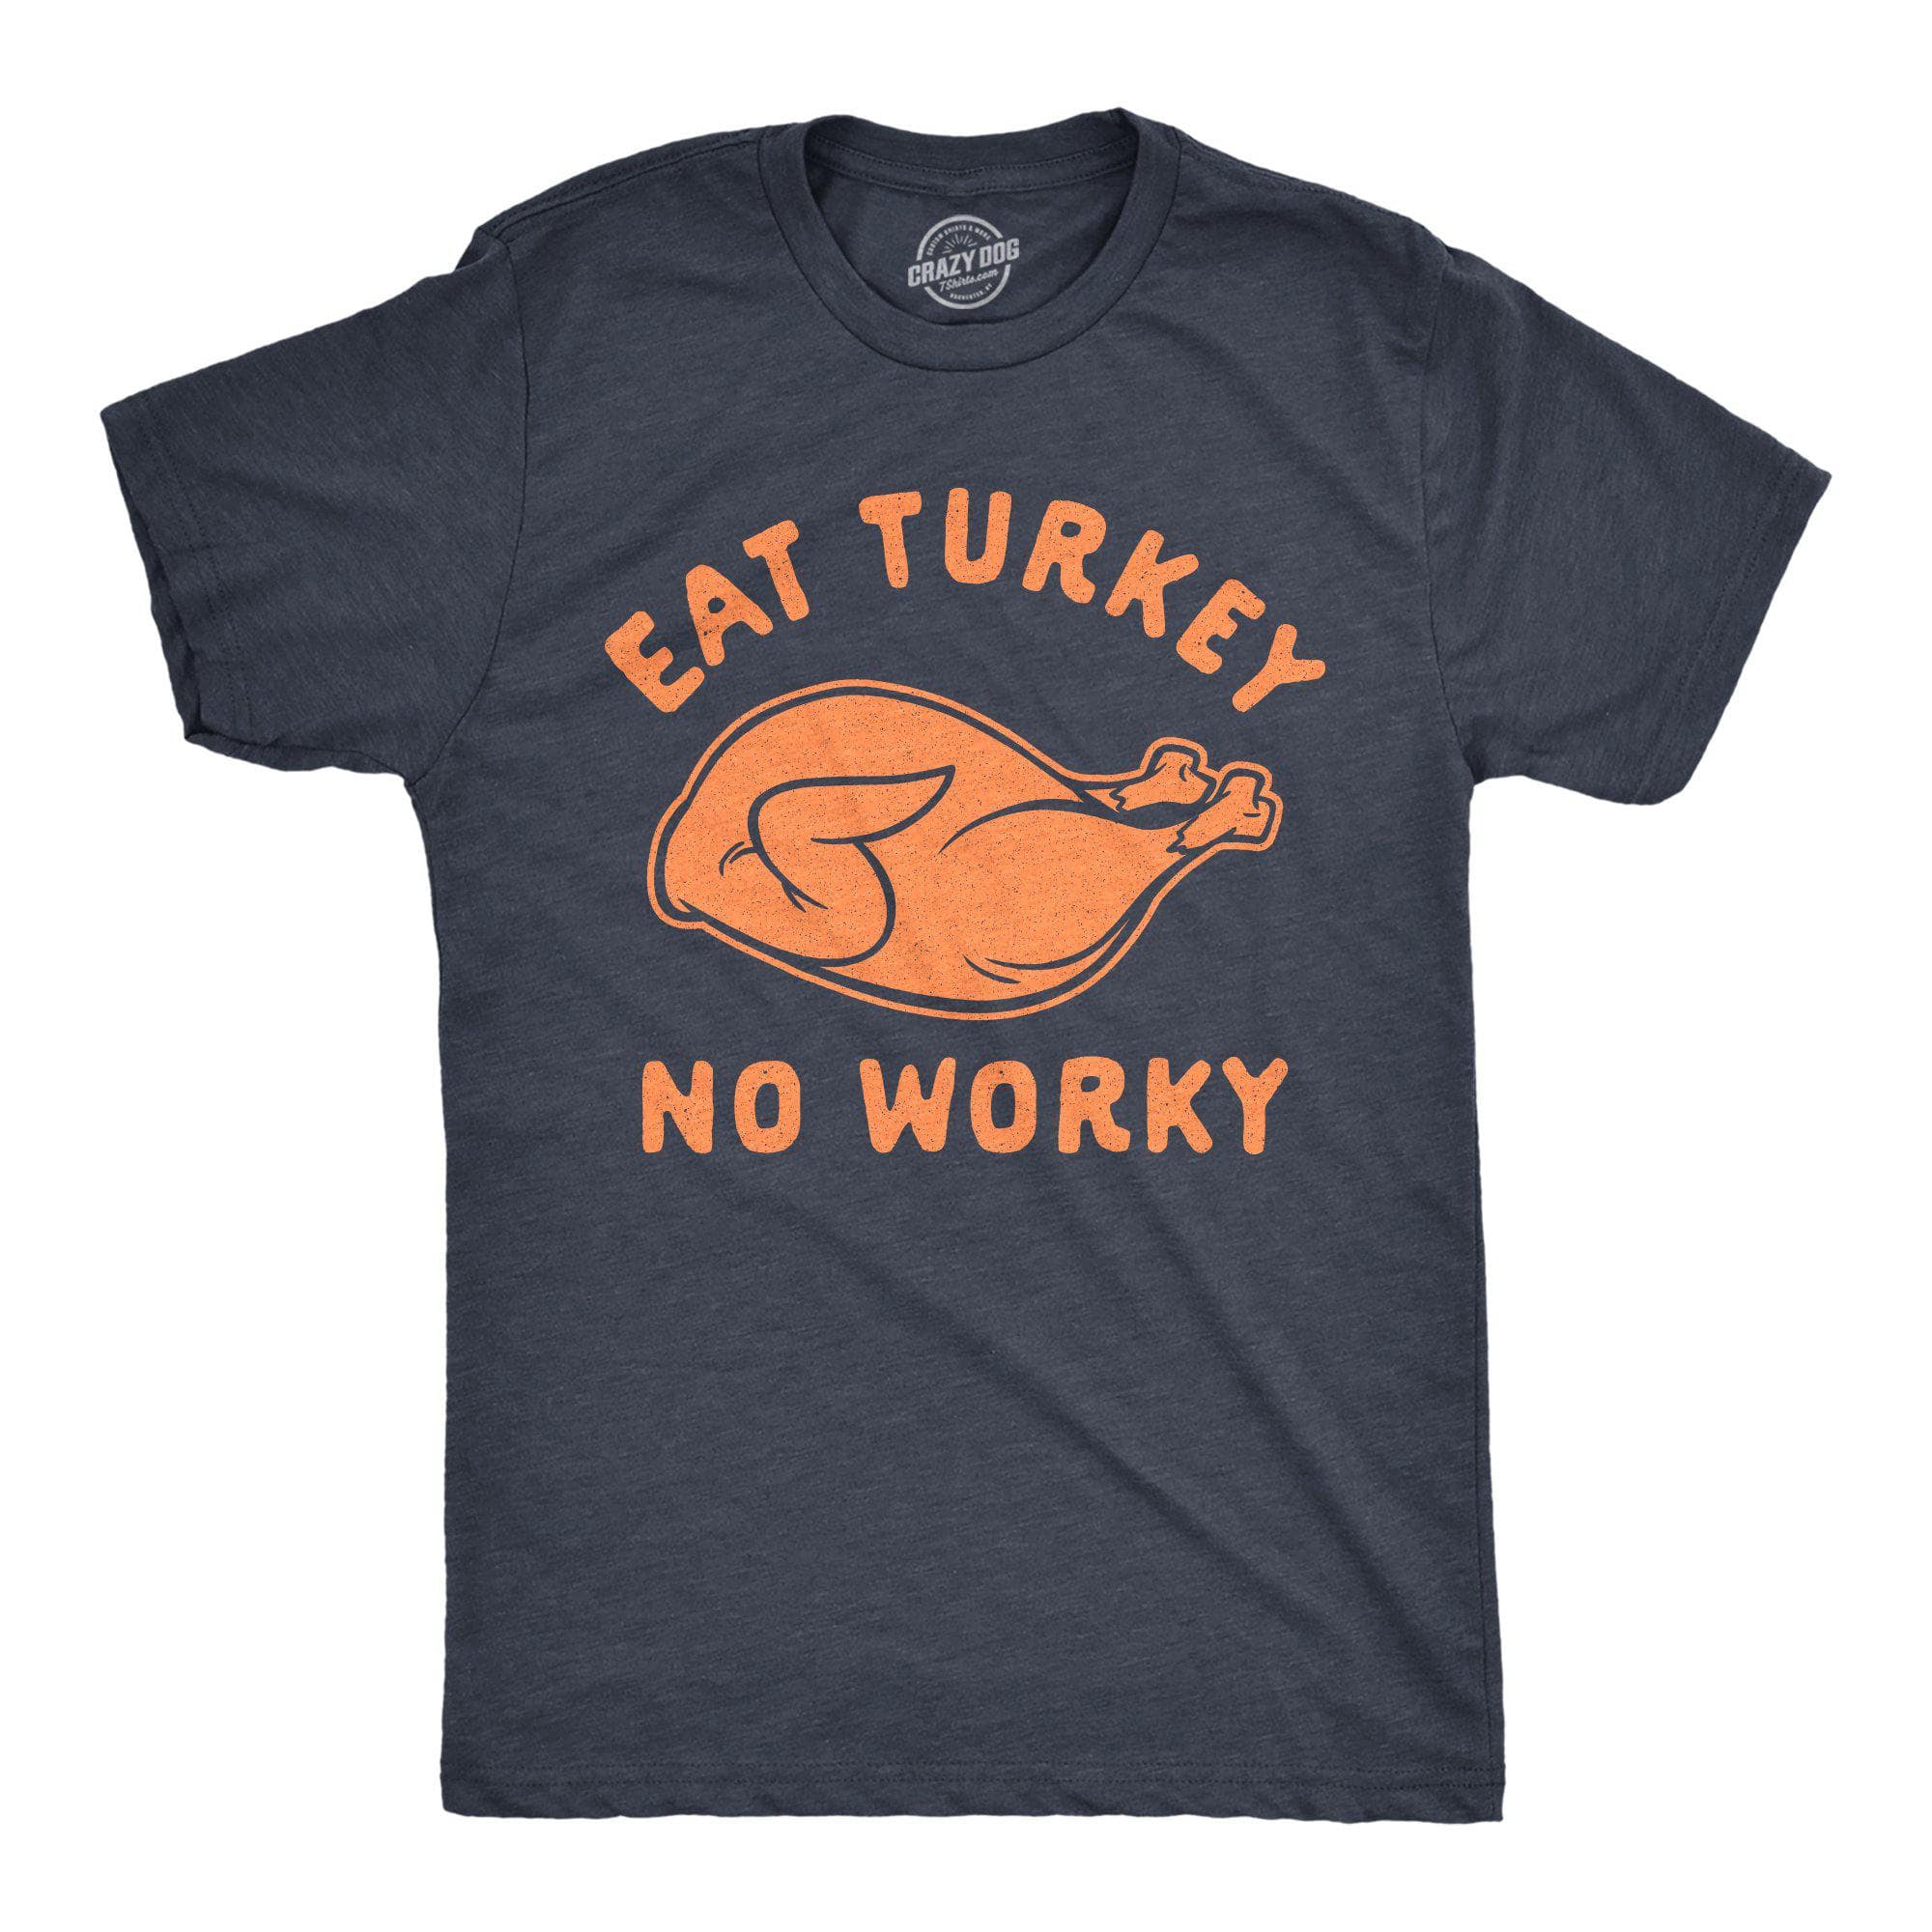 Eat Turkey No Worky Men's Tshirt - Crazy Dog T-Shirts